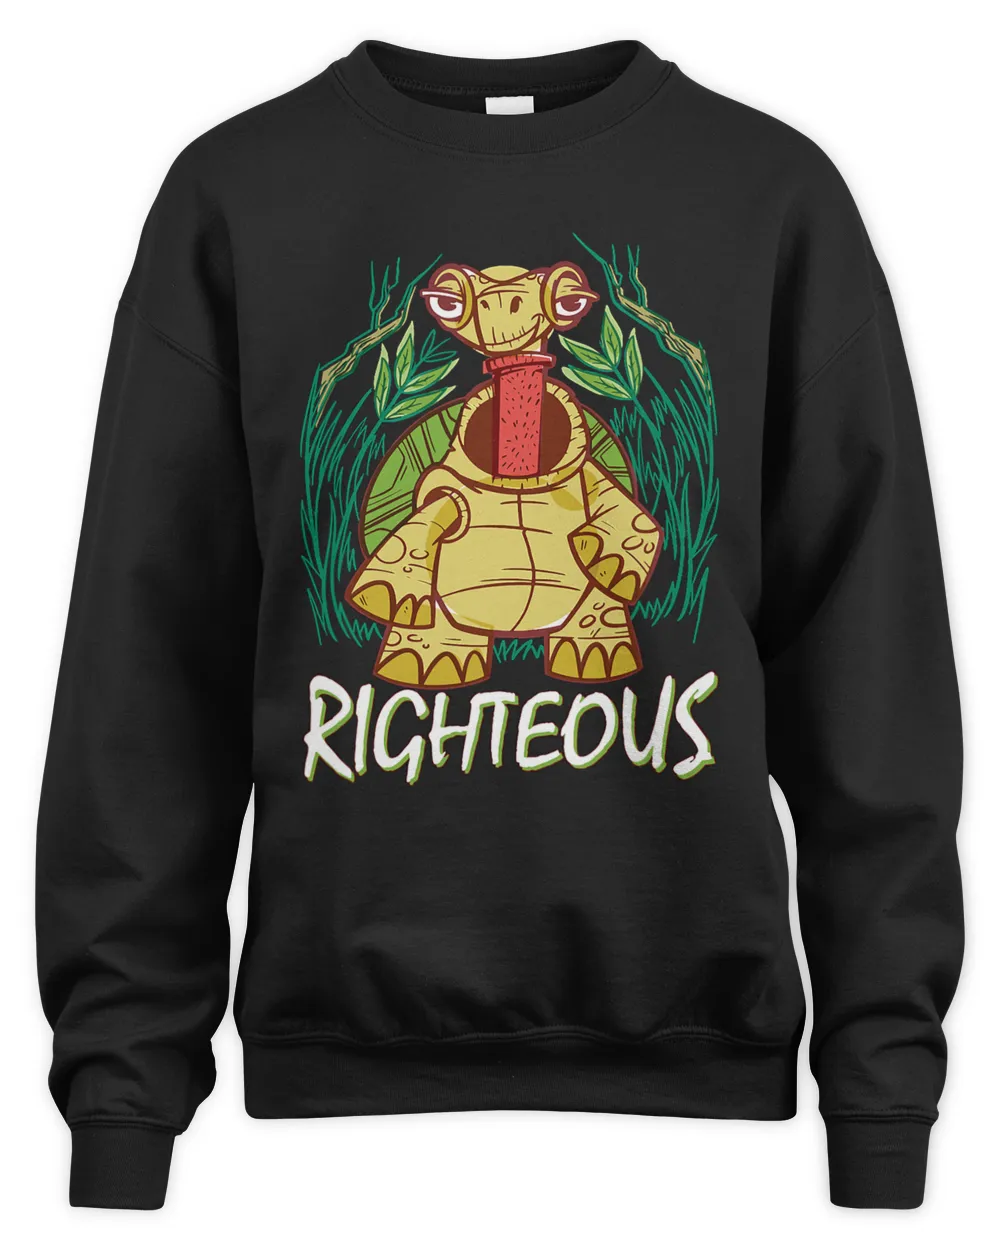 Righteous Tortoise